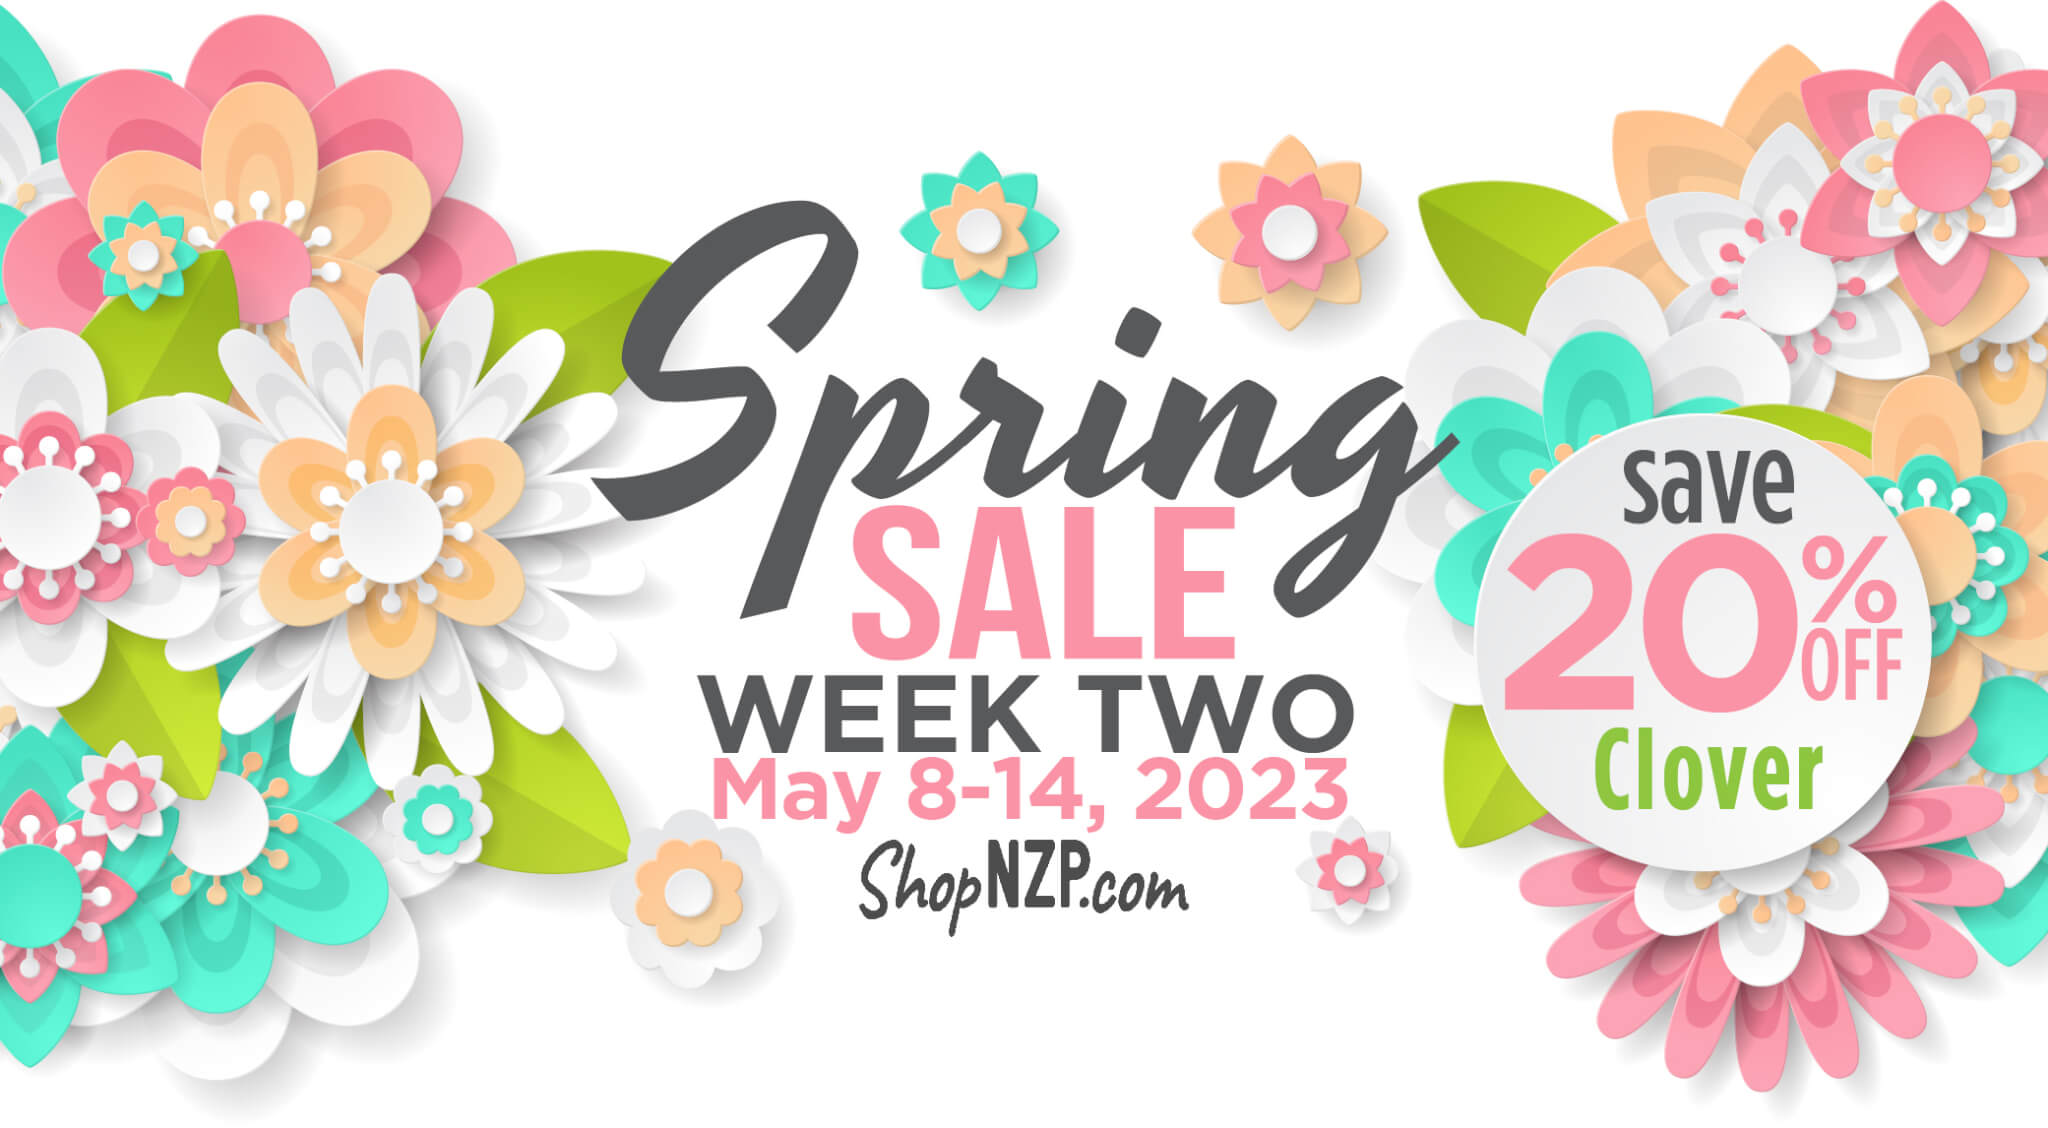 NZP Spring Sale Week 2 Save 20% off Clover at ShopNZP.com 